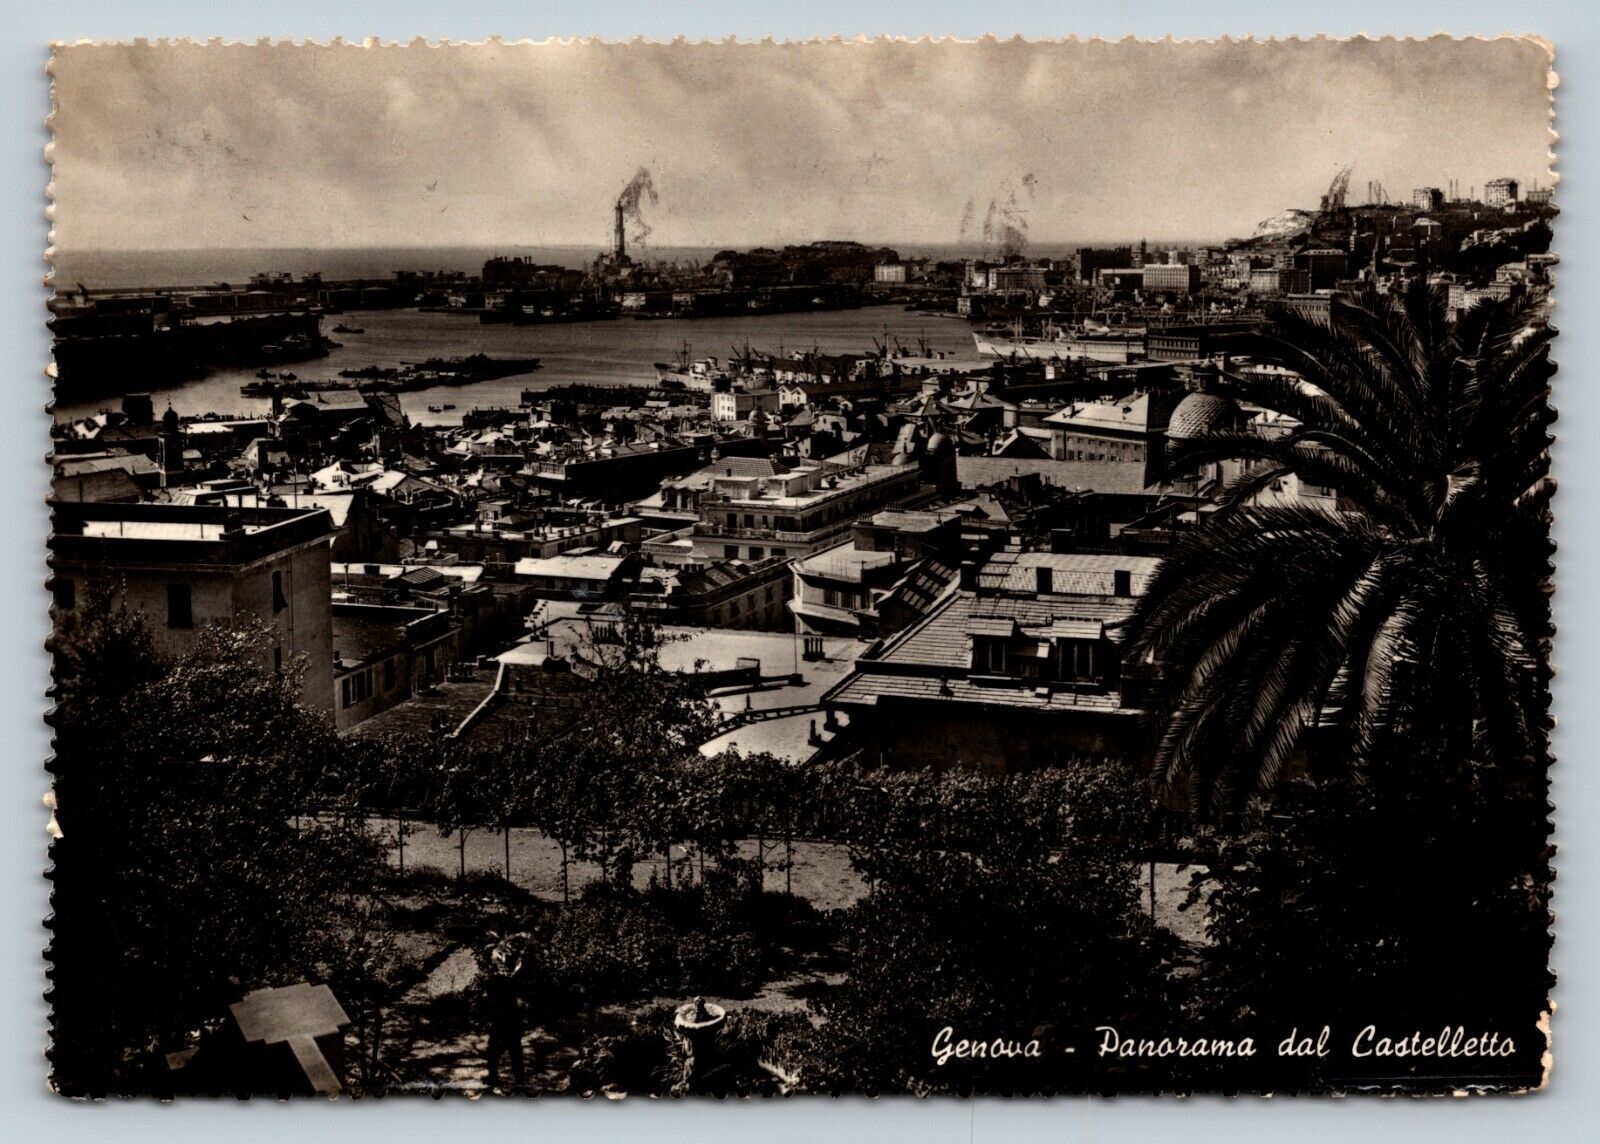 c1955 RPPC Postcard: Genoa, Italy - Beautiful City View From Castelletto - 4x6